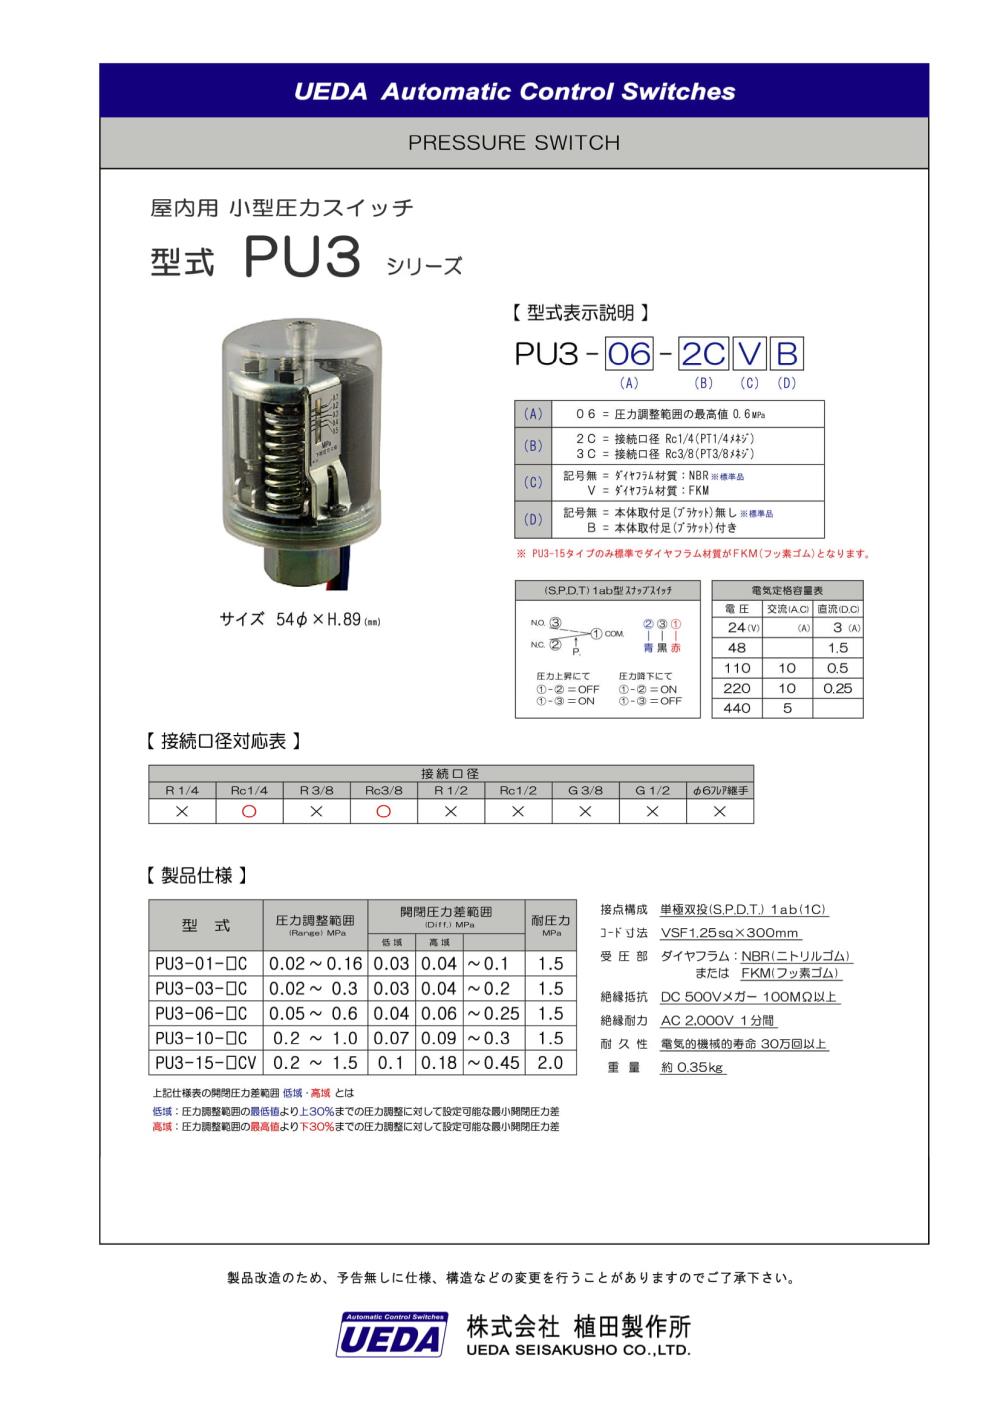 UEDA Pressure Switch PU3 Series,PU3 Series, PU3-01, PU3-03, PU3-06, PU3-10, PU3-15, UEDA, UEDA SEISAKUSHO, Pressure Switch, Pressure Control ,UEDA,Instruments and Controls/Instruments and Instrumentation